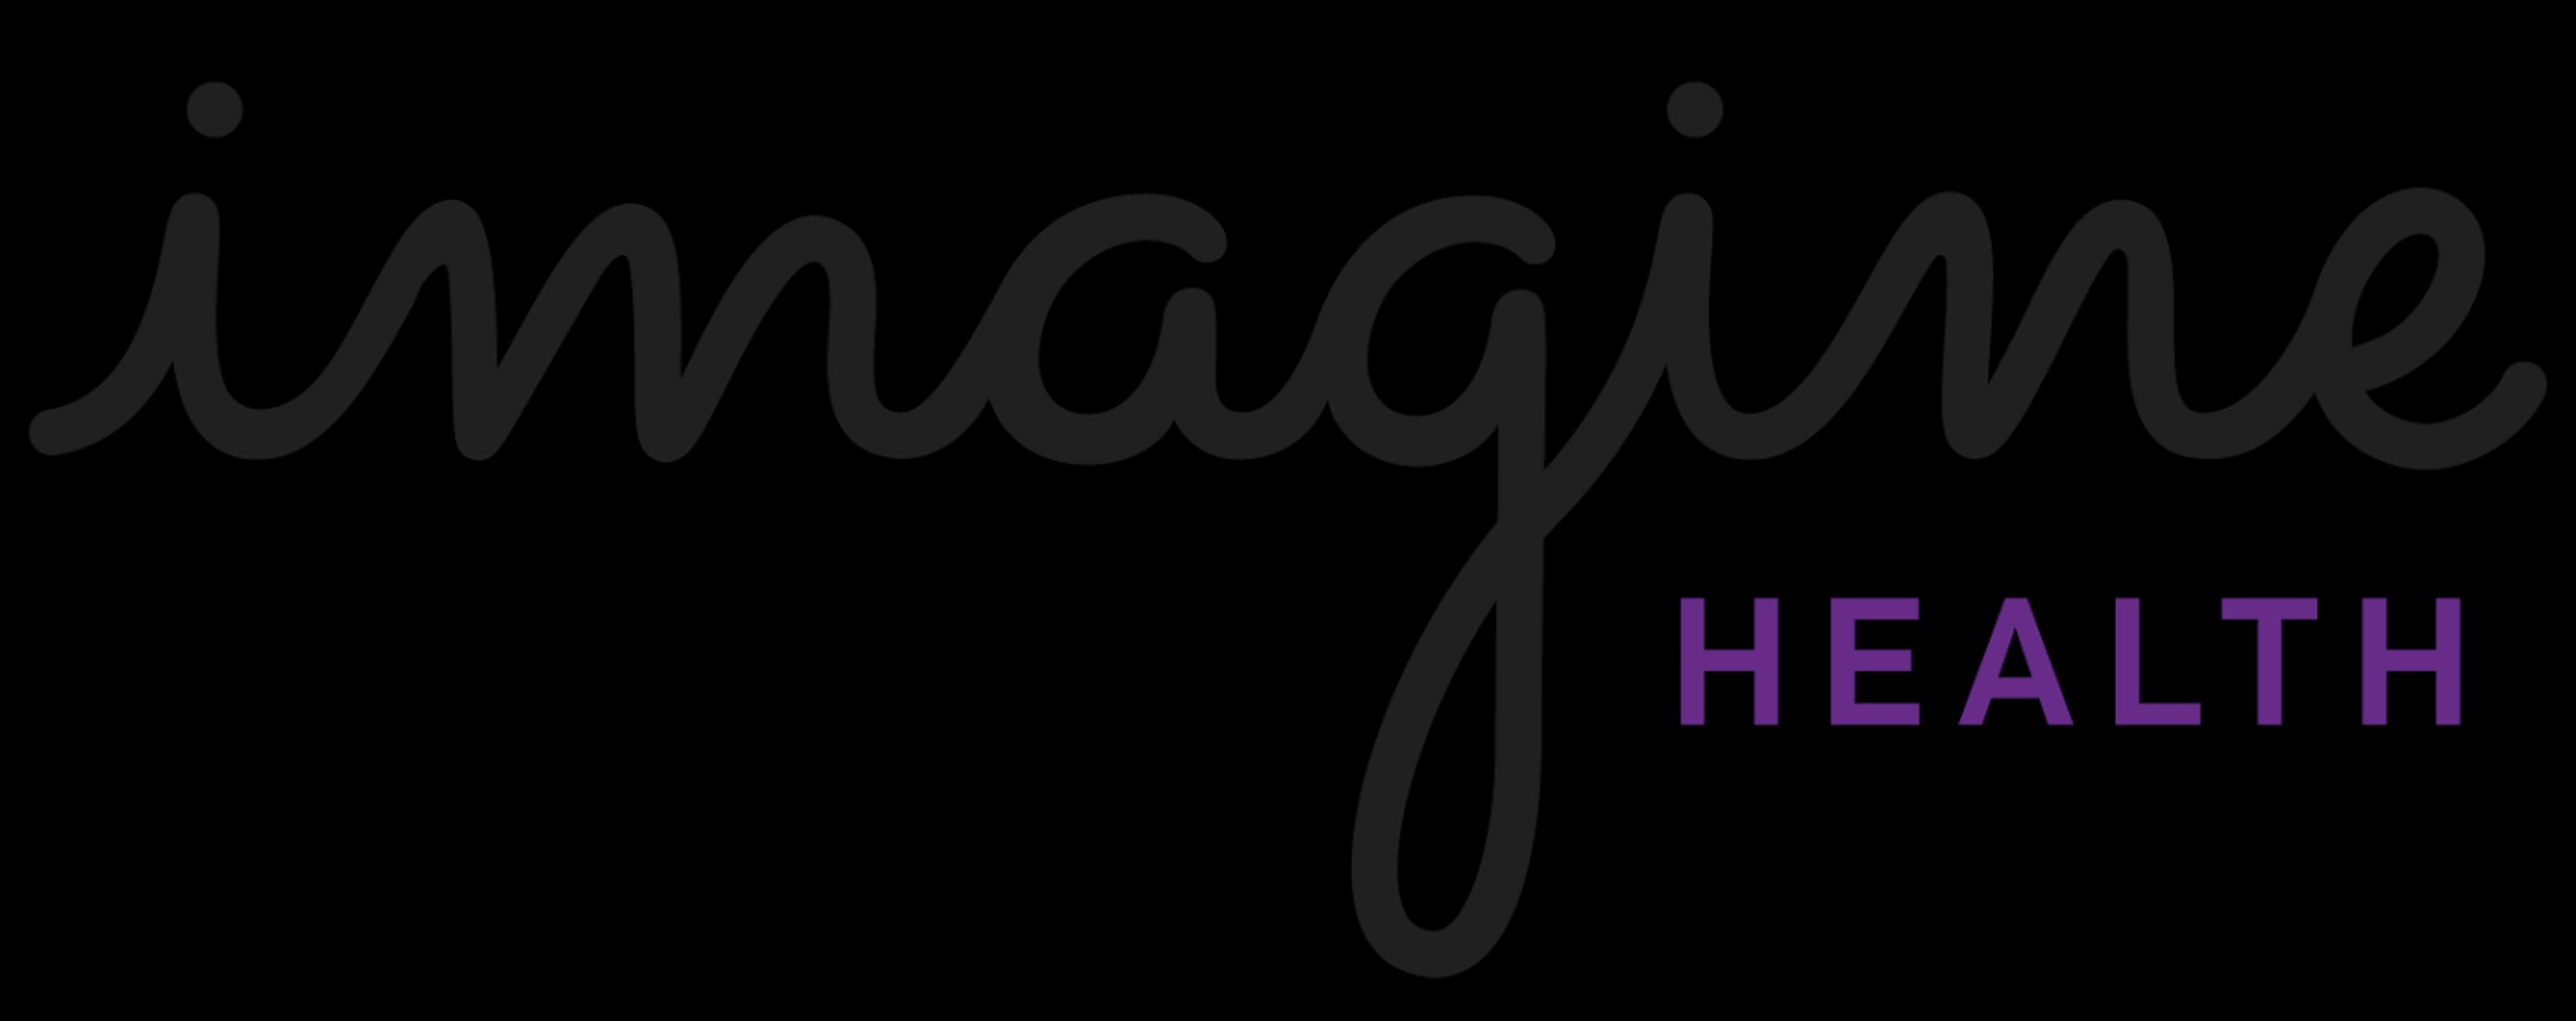 Imagine Health_logo